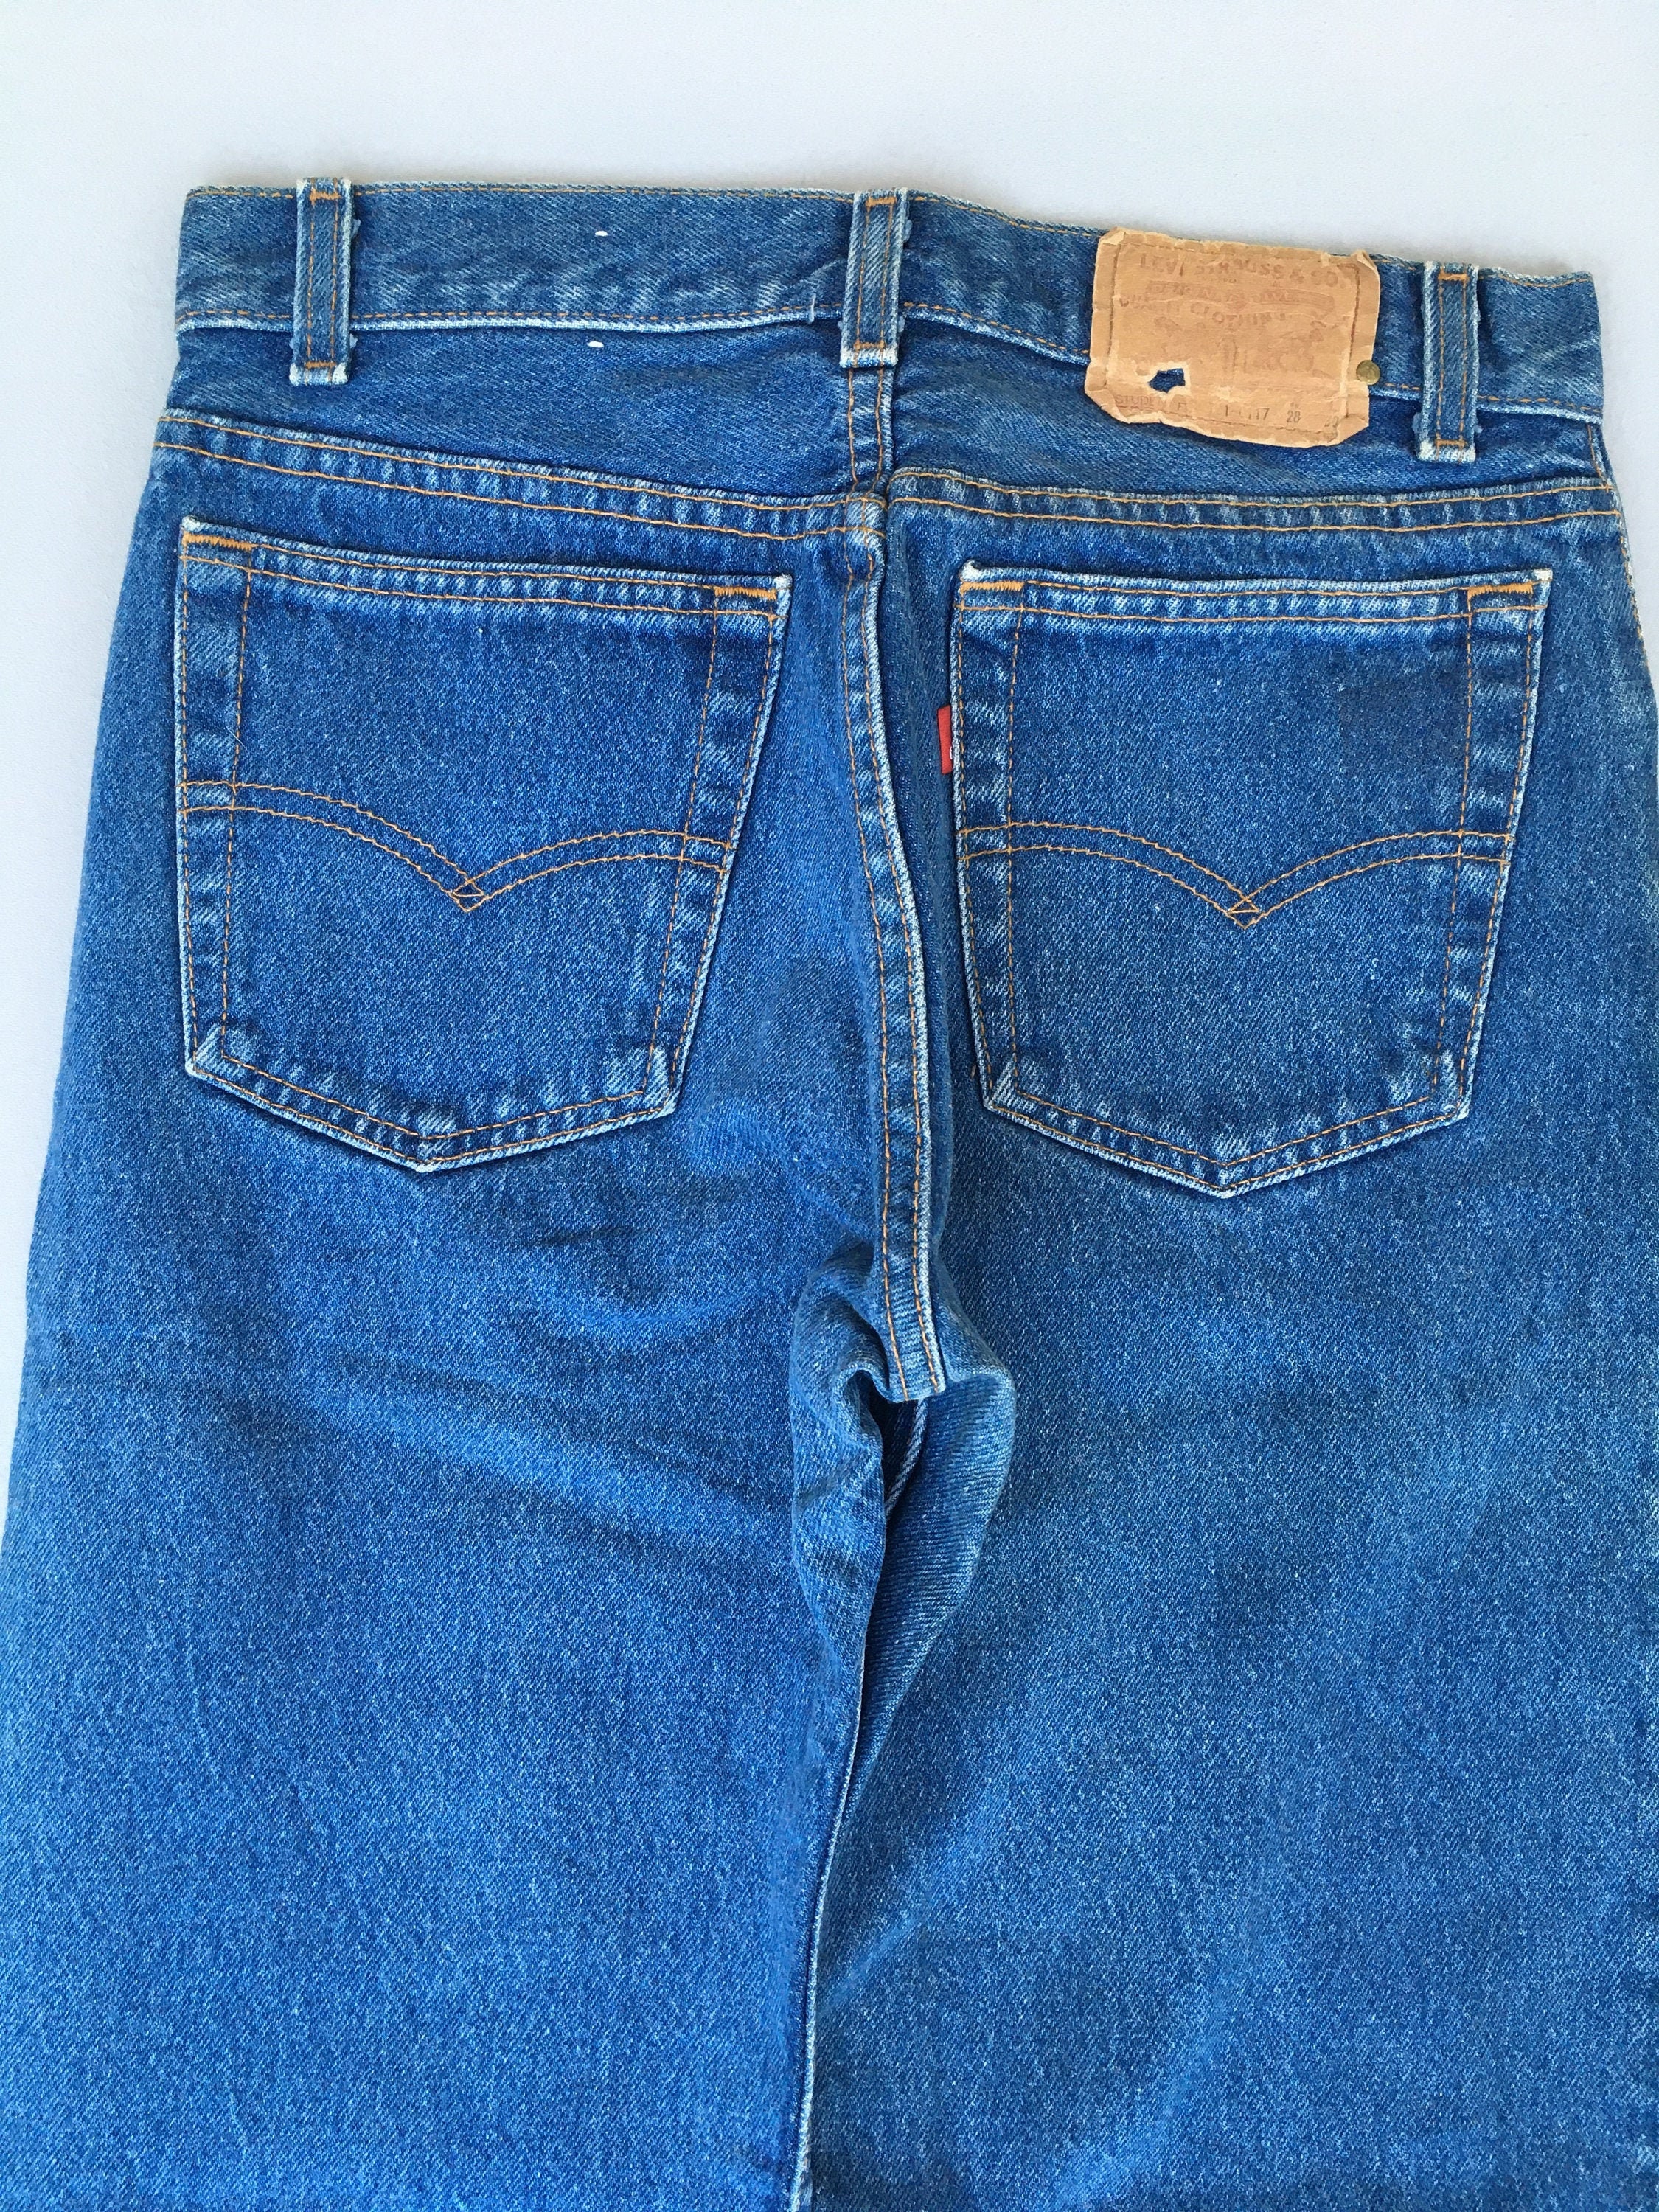 Size 27x27.5 Vintage Levis 701 Student Jeans Light Washed - Etsy UK